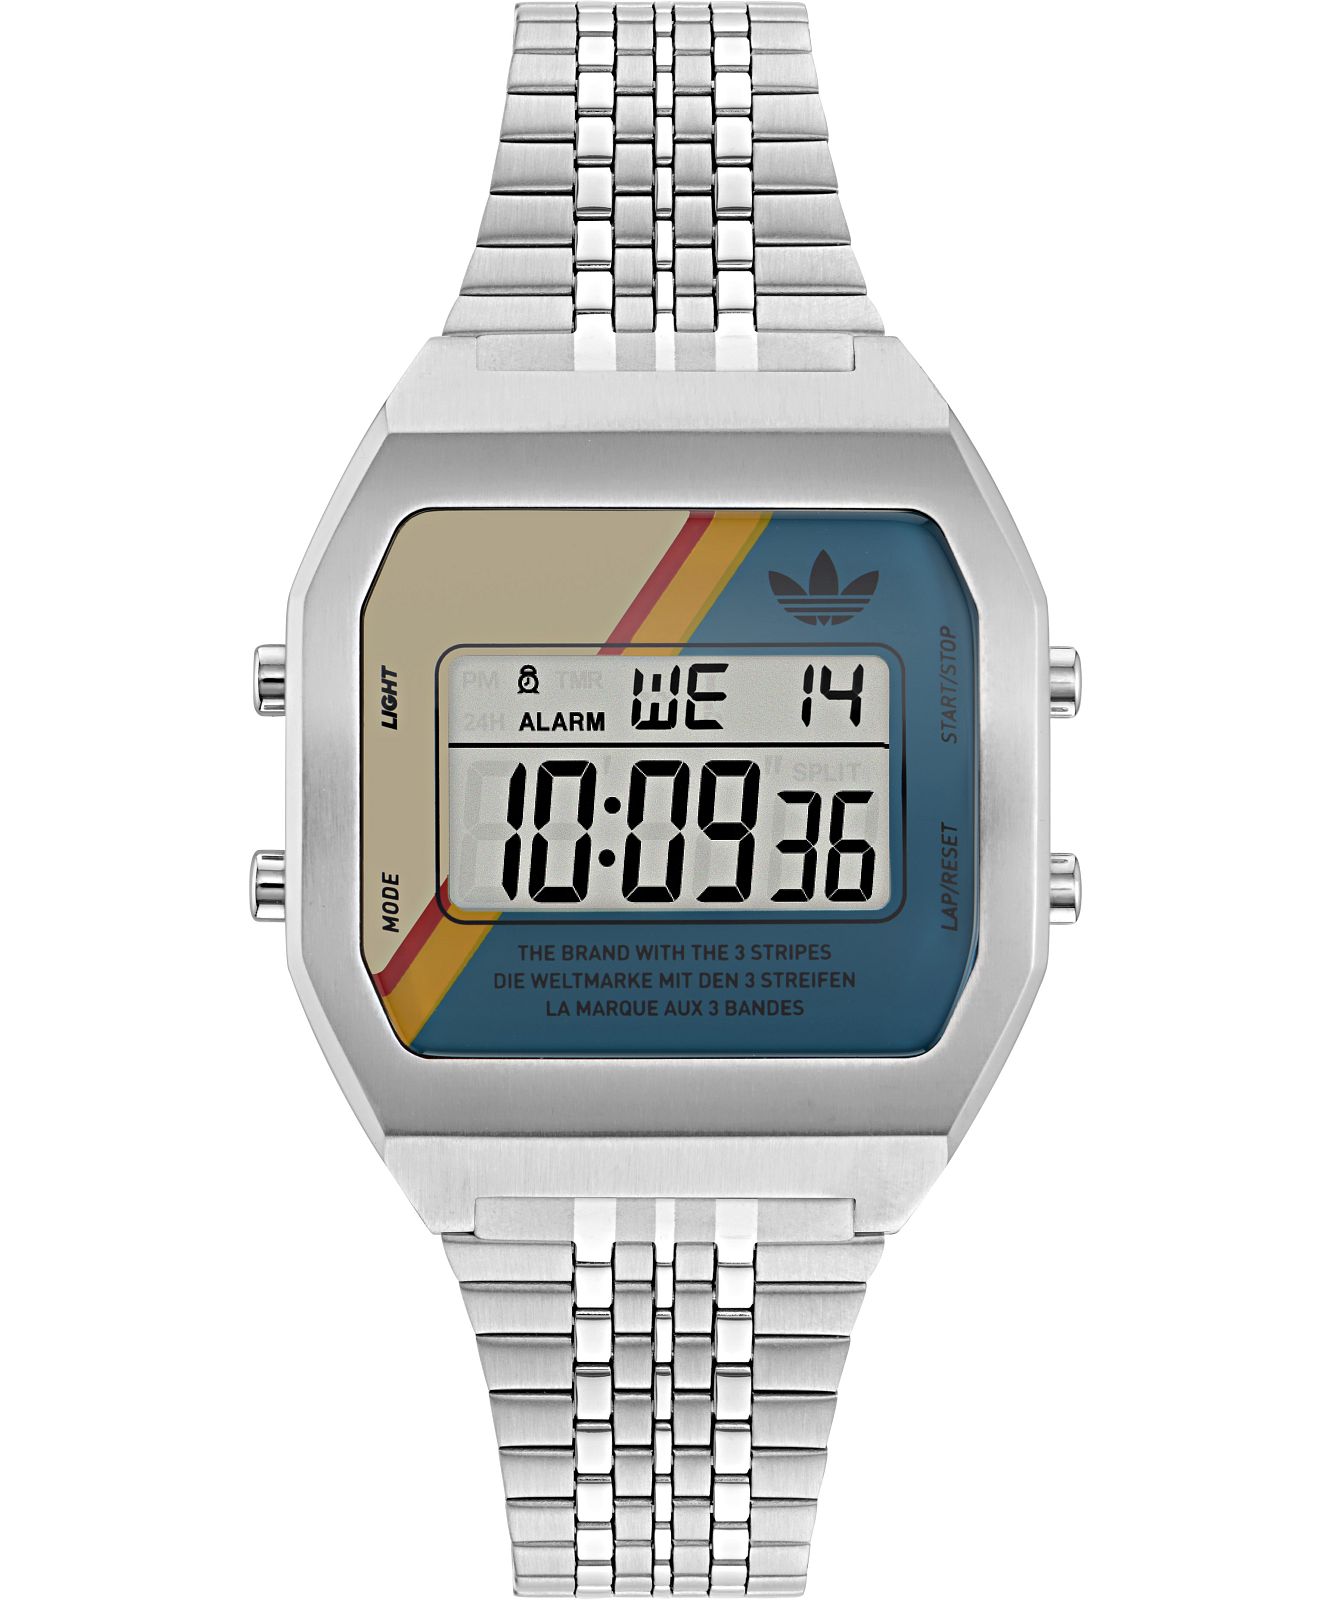 Super günstig! Adidas Originals AOST23556 - Street Digital Two • Watch